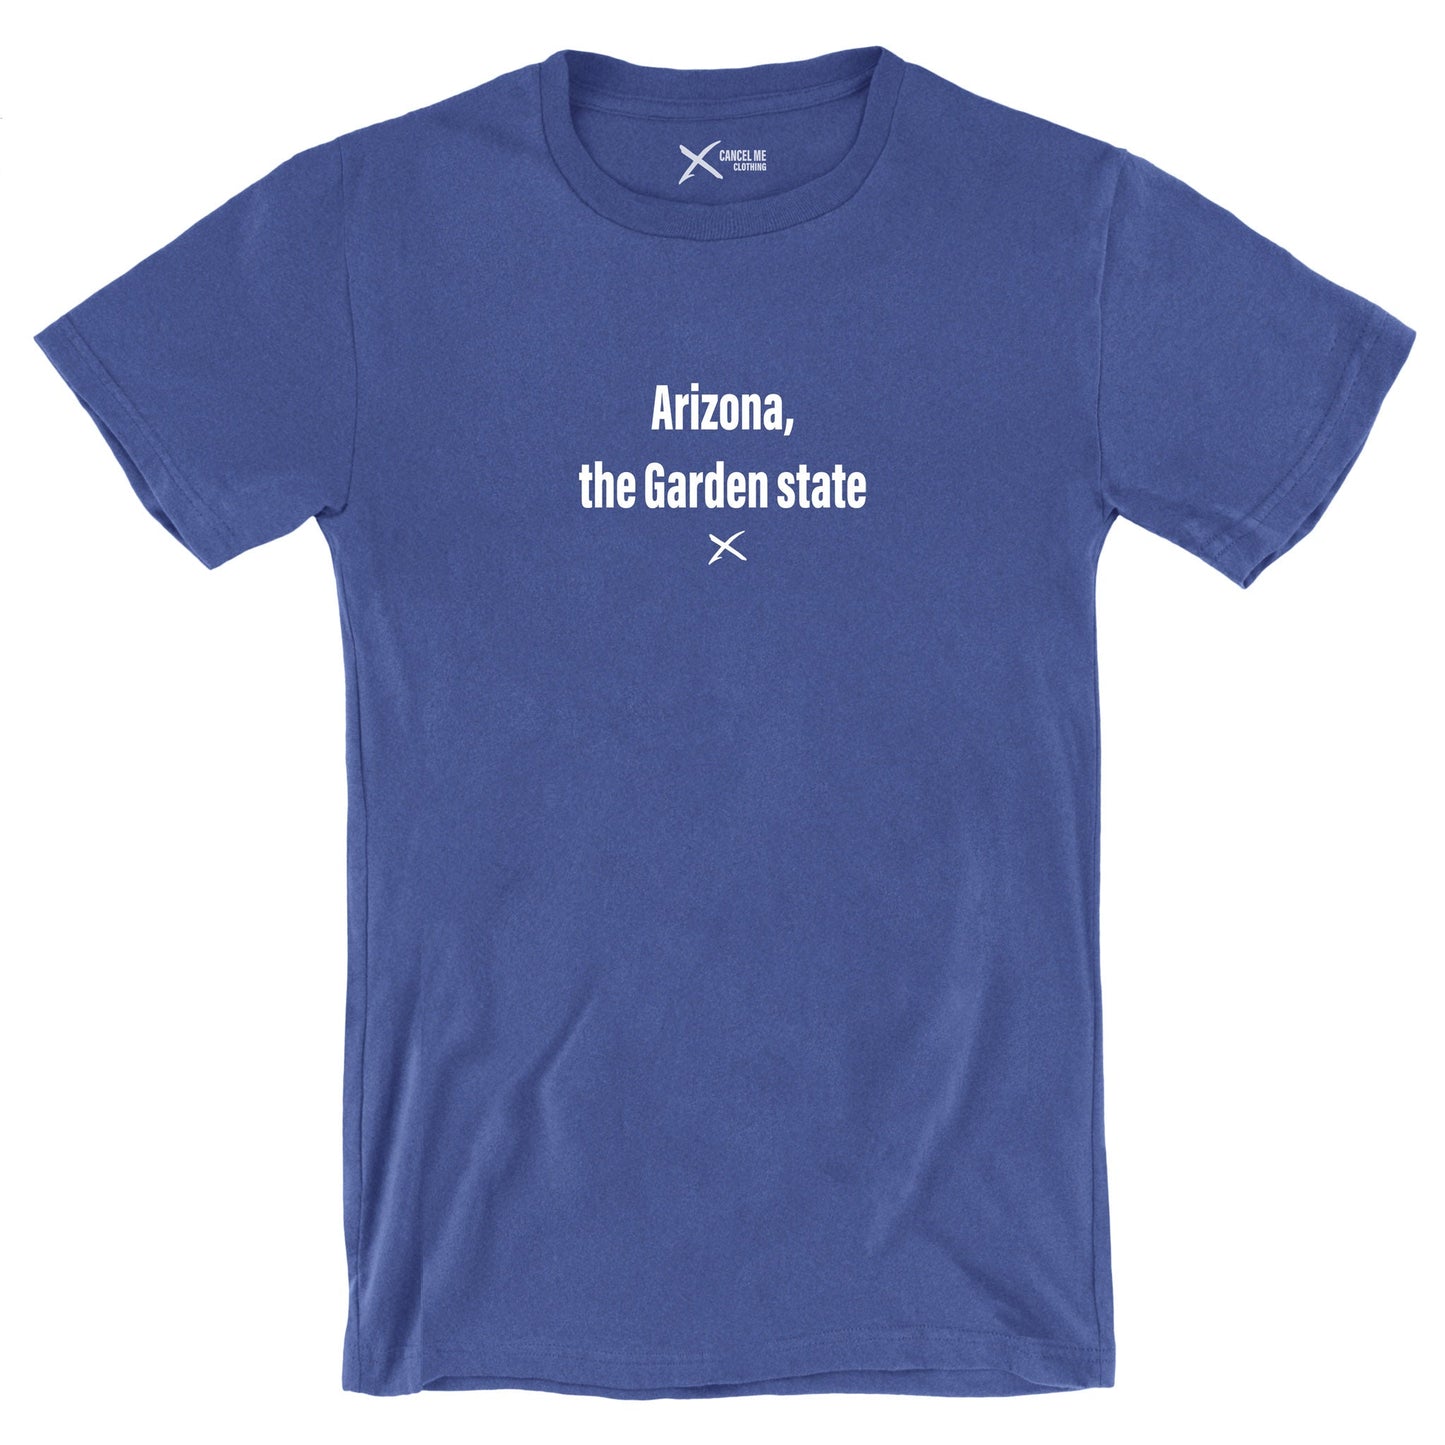 Arizona, the Garden state - Shirt